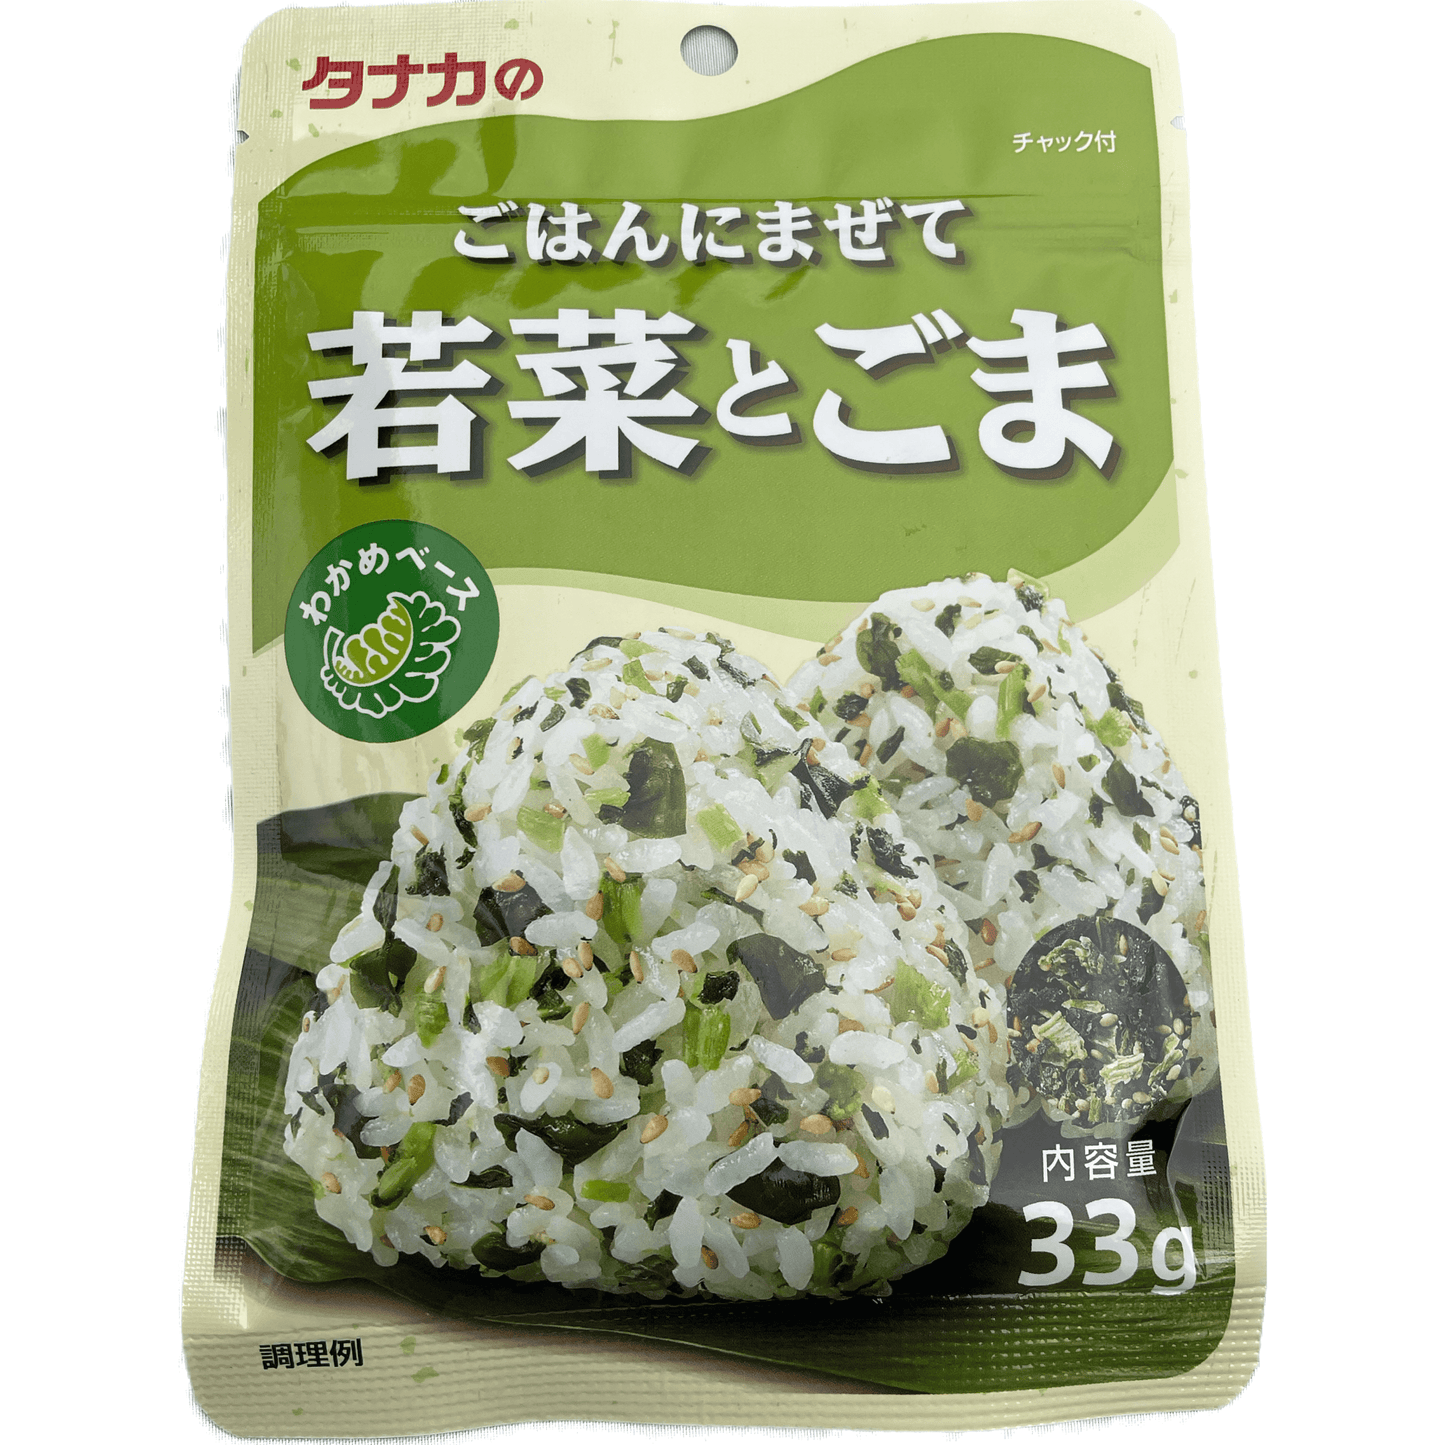 Tanaka mixed with rice (wakana and sesame) タナカ　ごはんにまぜて＜若菜とごま＞33g - RiceWineShop